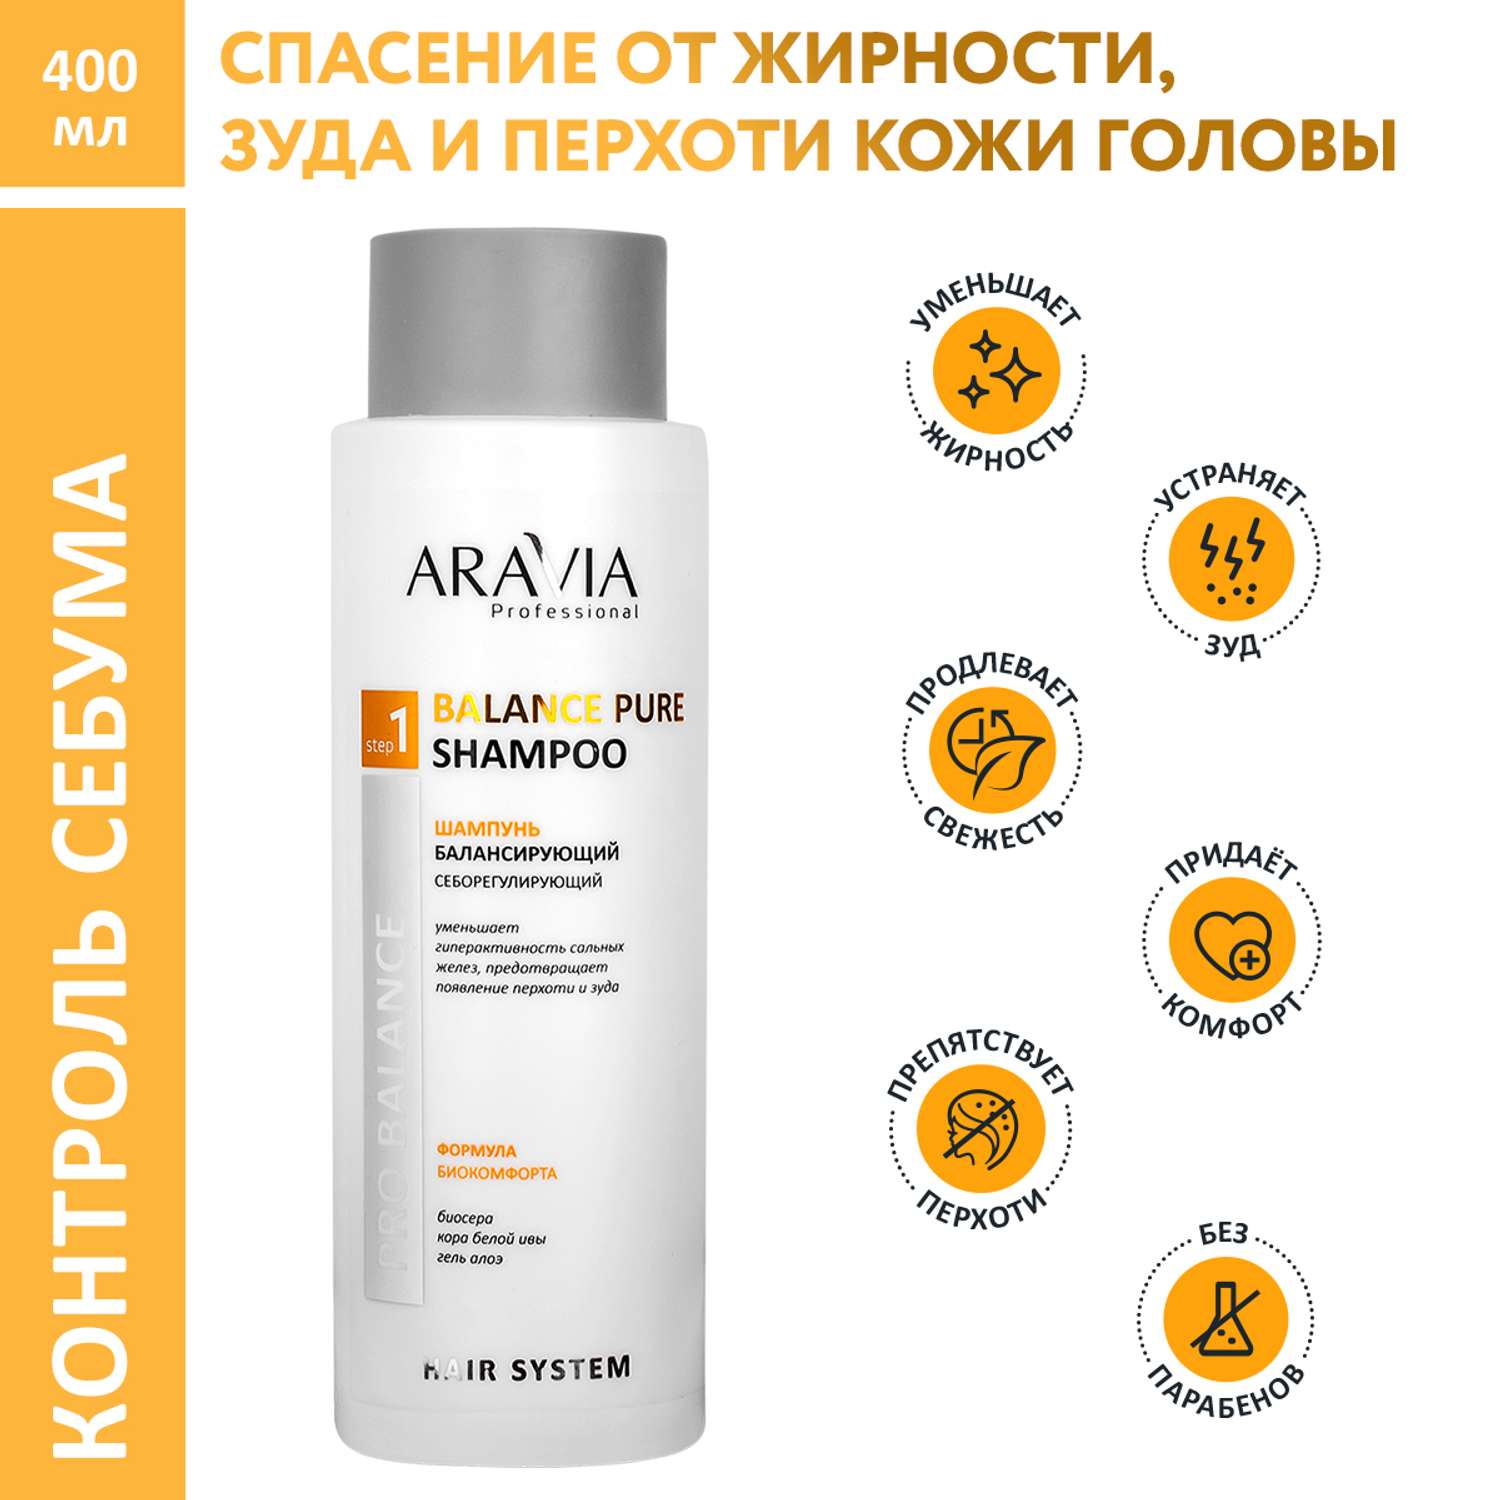 Шампунь ARAVIA Professional балансирующий себорегулирующий Balance Pure Shampoo 400 мл - фото 1